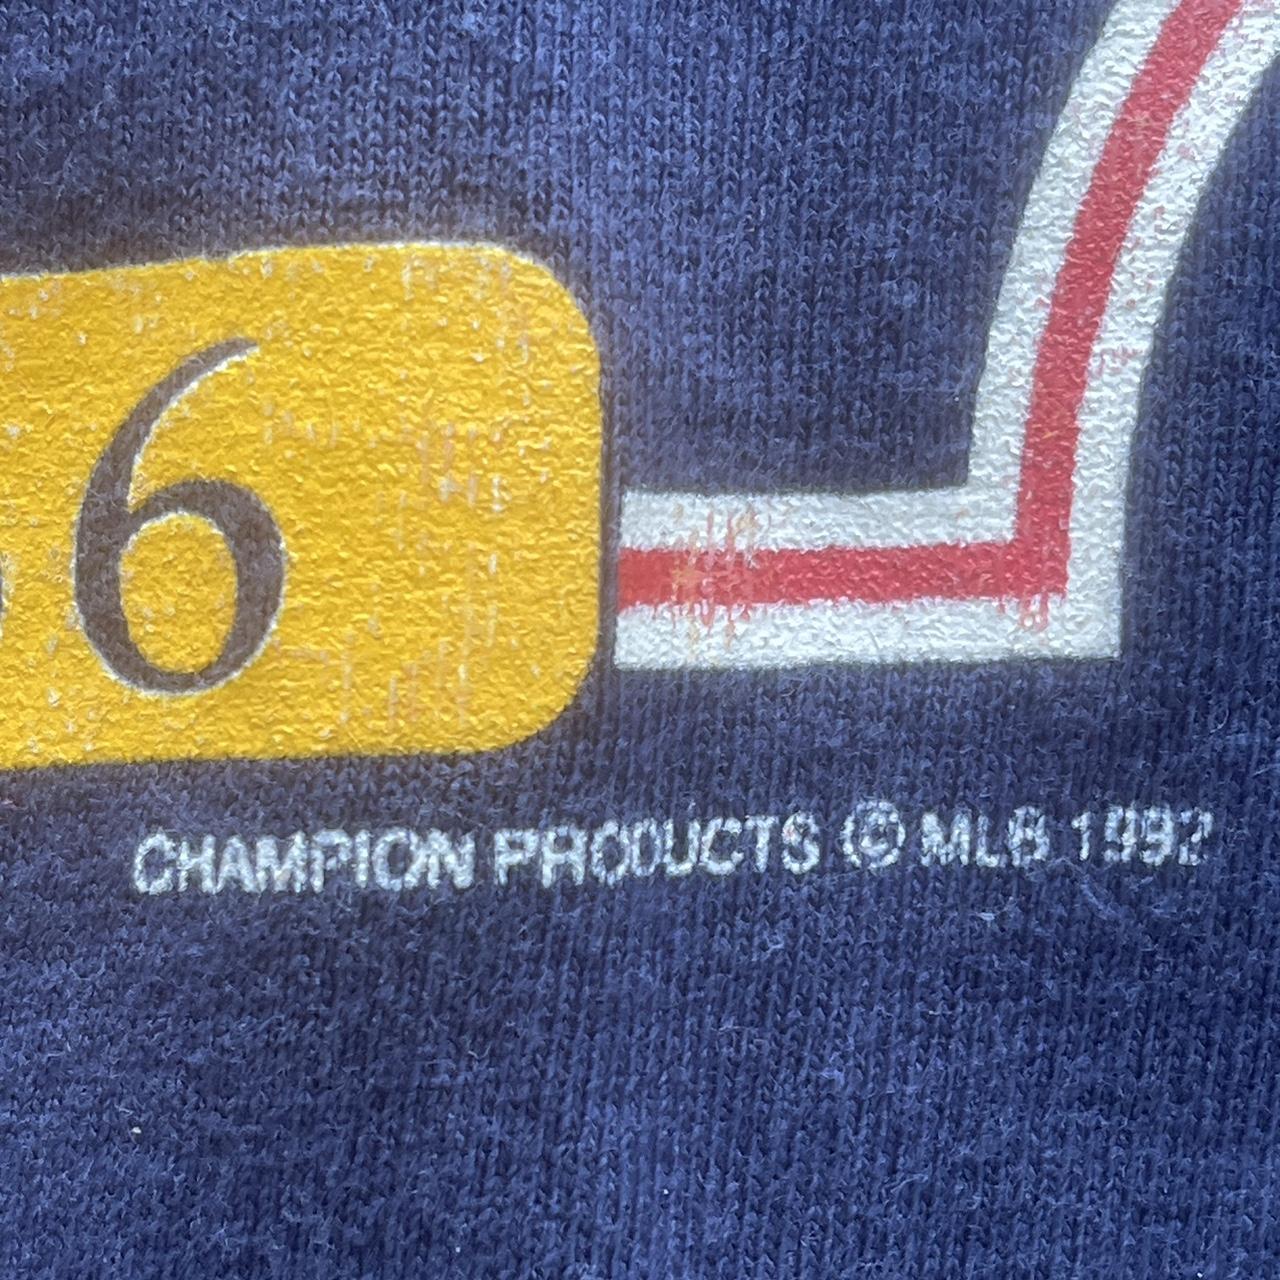 Vintage 90s Atlanta Braves shirt Size medium Good - Depop